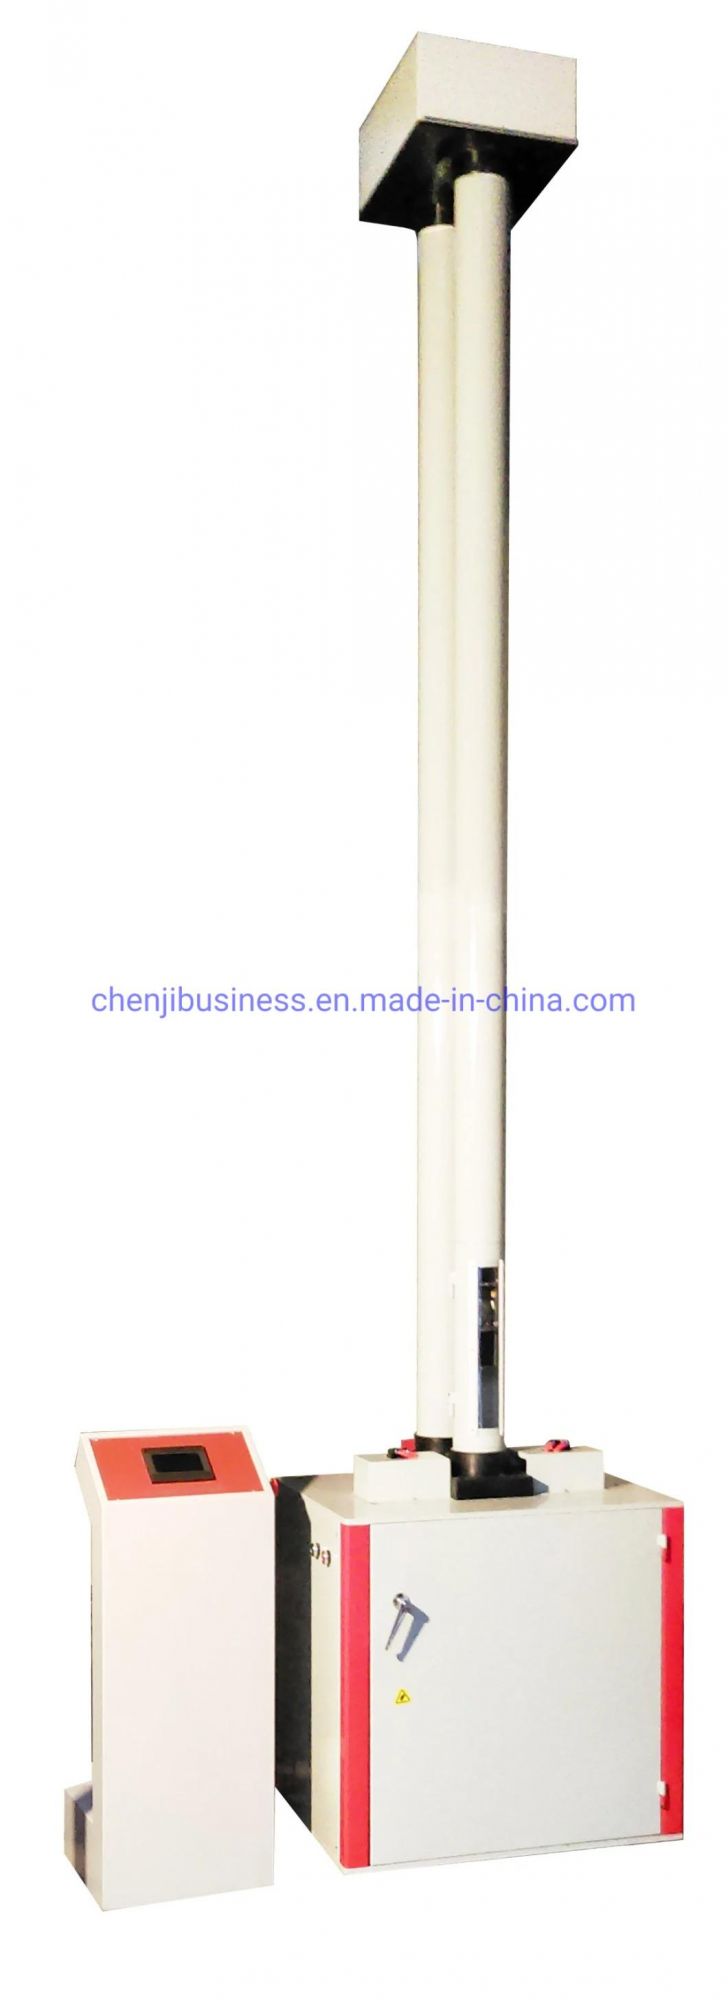 Cxjl-450m D26 D90 Plastic Pipe Drop Hammer Impact Testing Machine